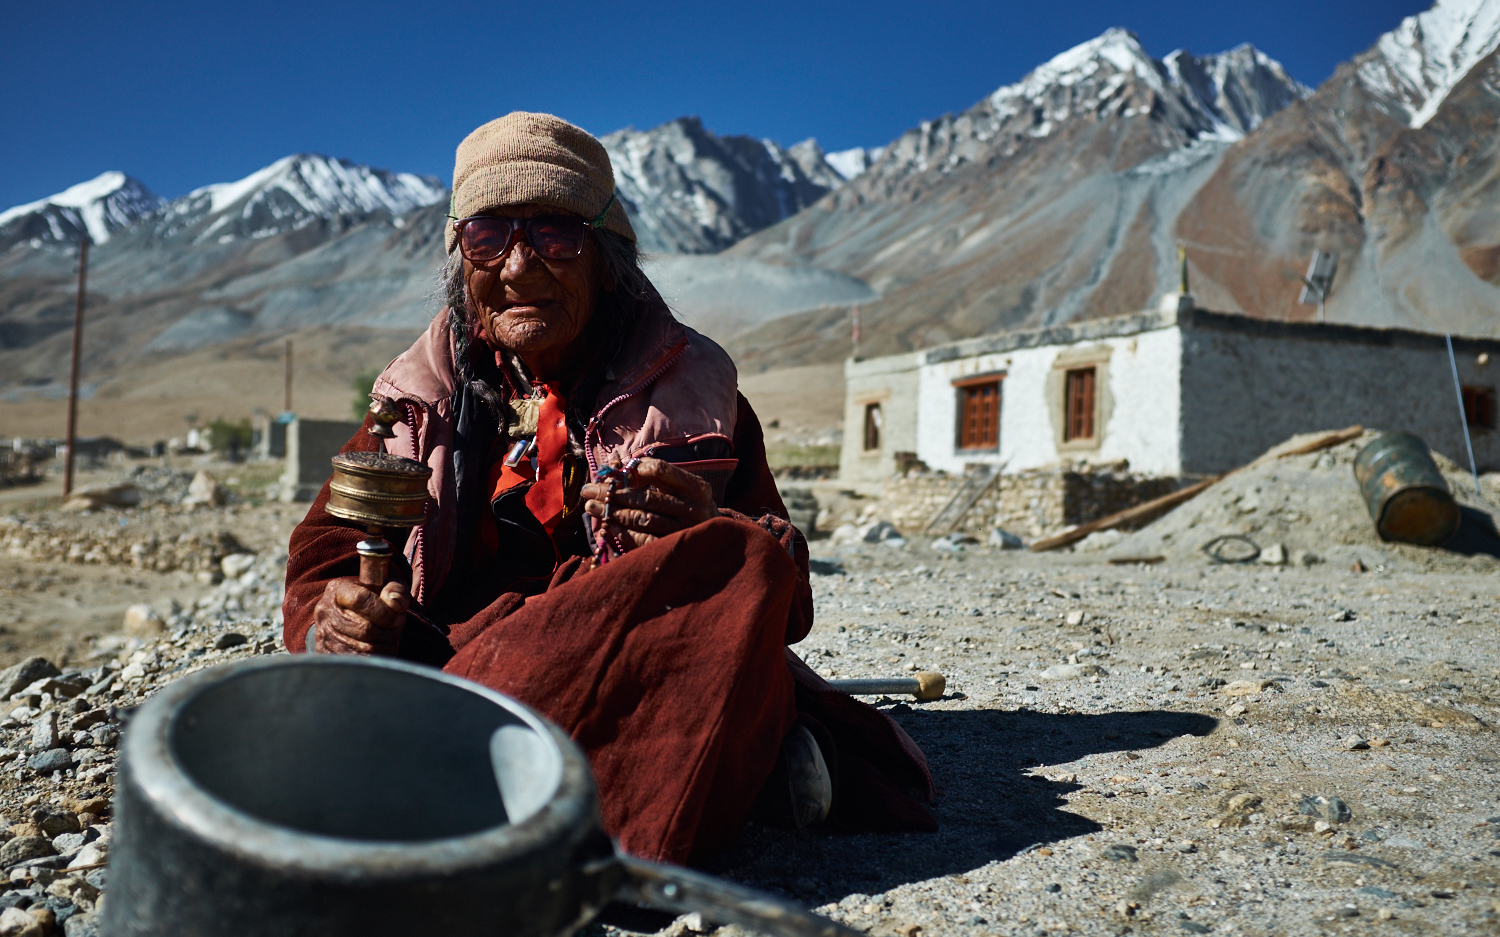 Ladakh . Fuji X100S . 23mm . f/2.8 . 1/640” . ISO 200